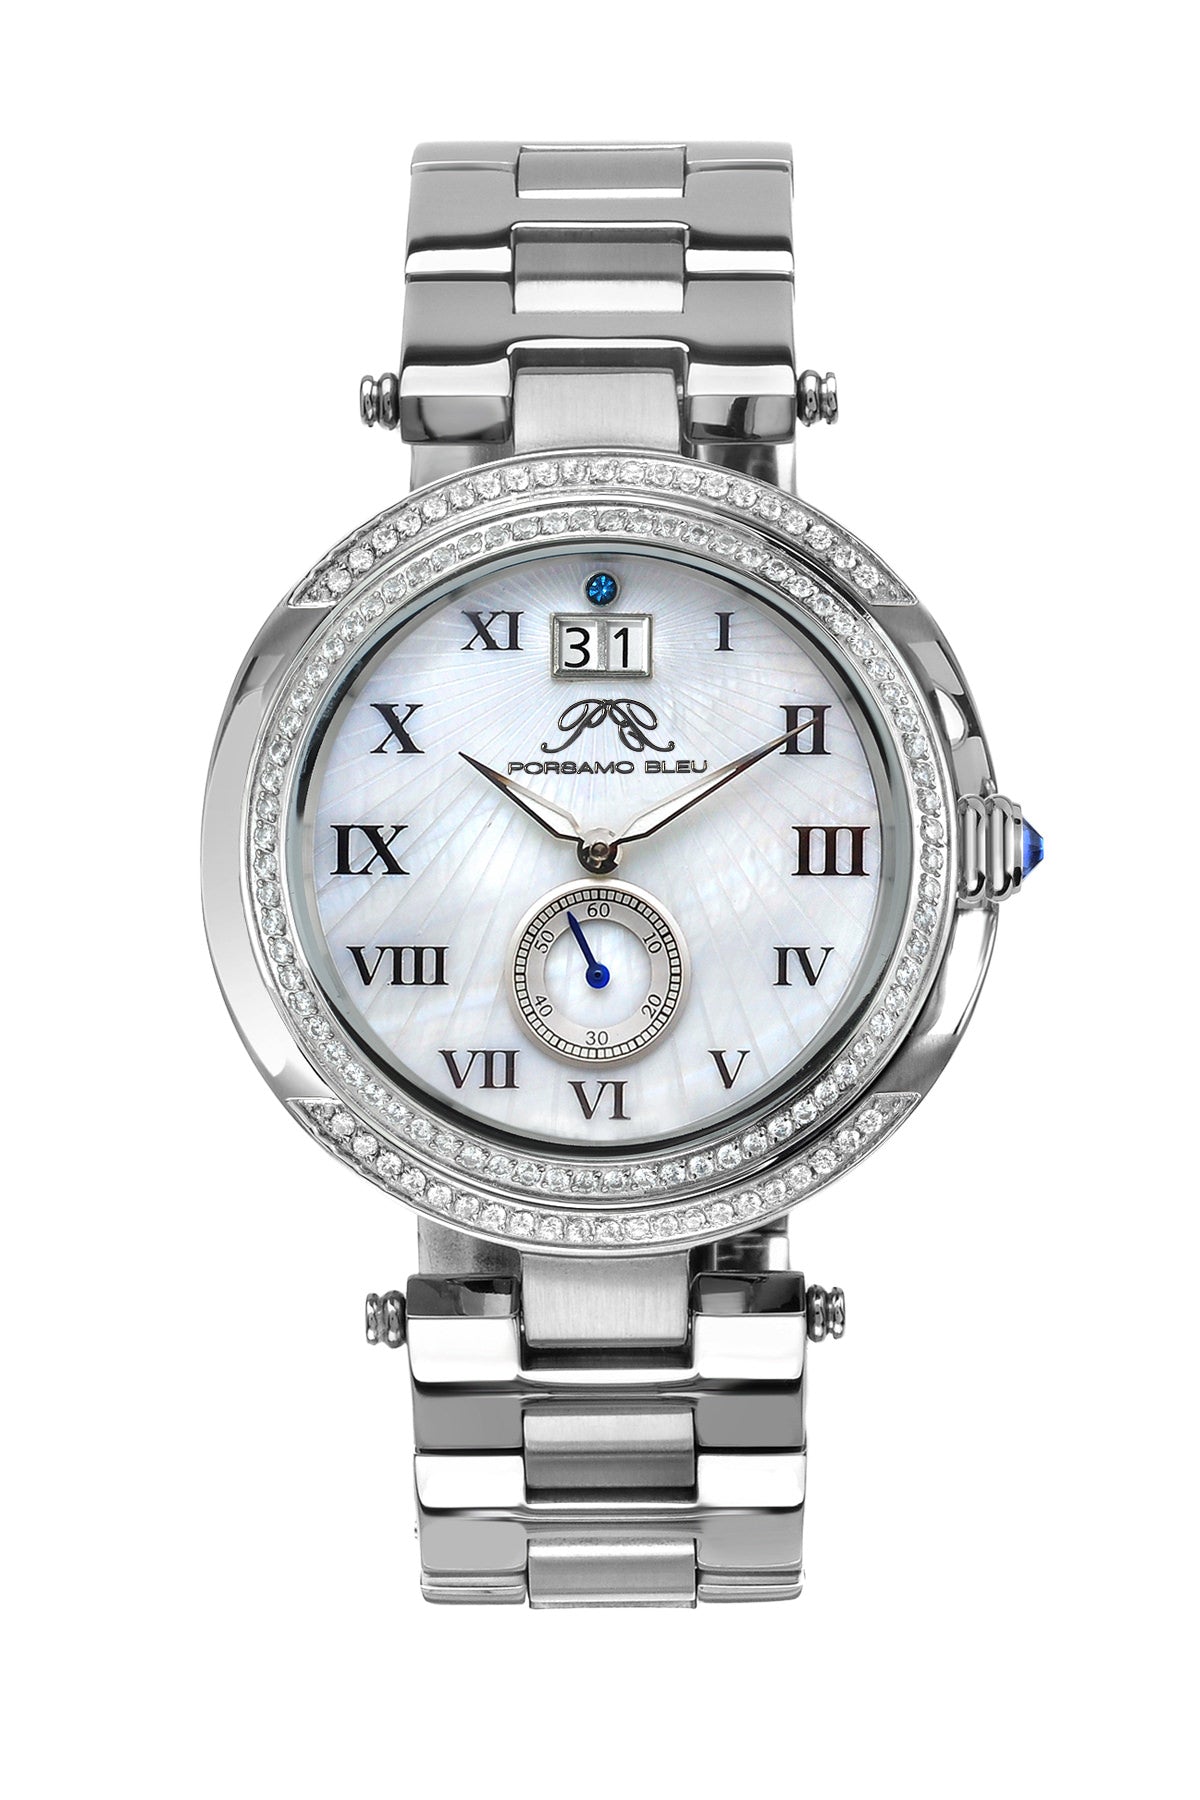 Porsamo Bleu South Sea Crystal Luxury Women's Stainless Steel Watch, Silver 104ESSC